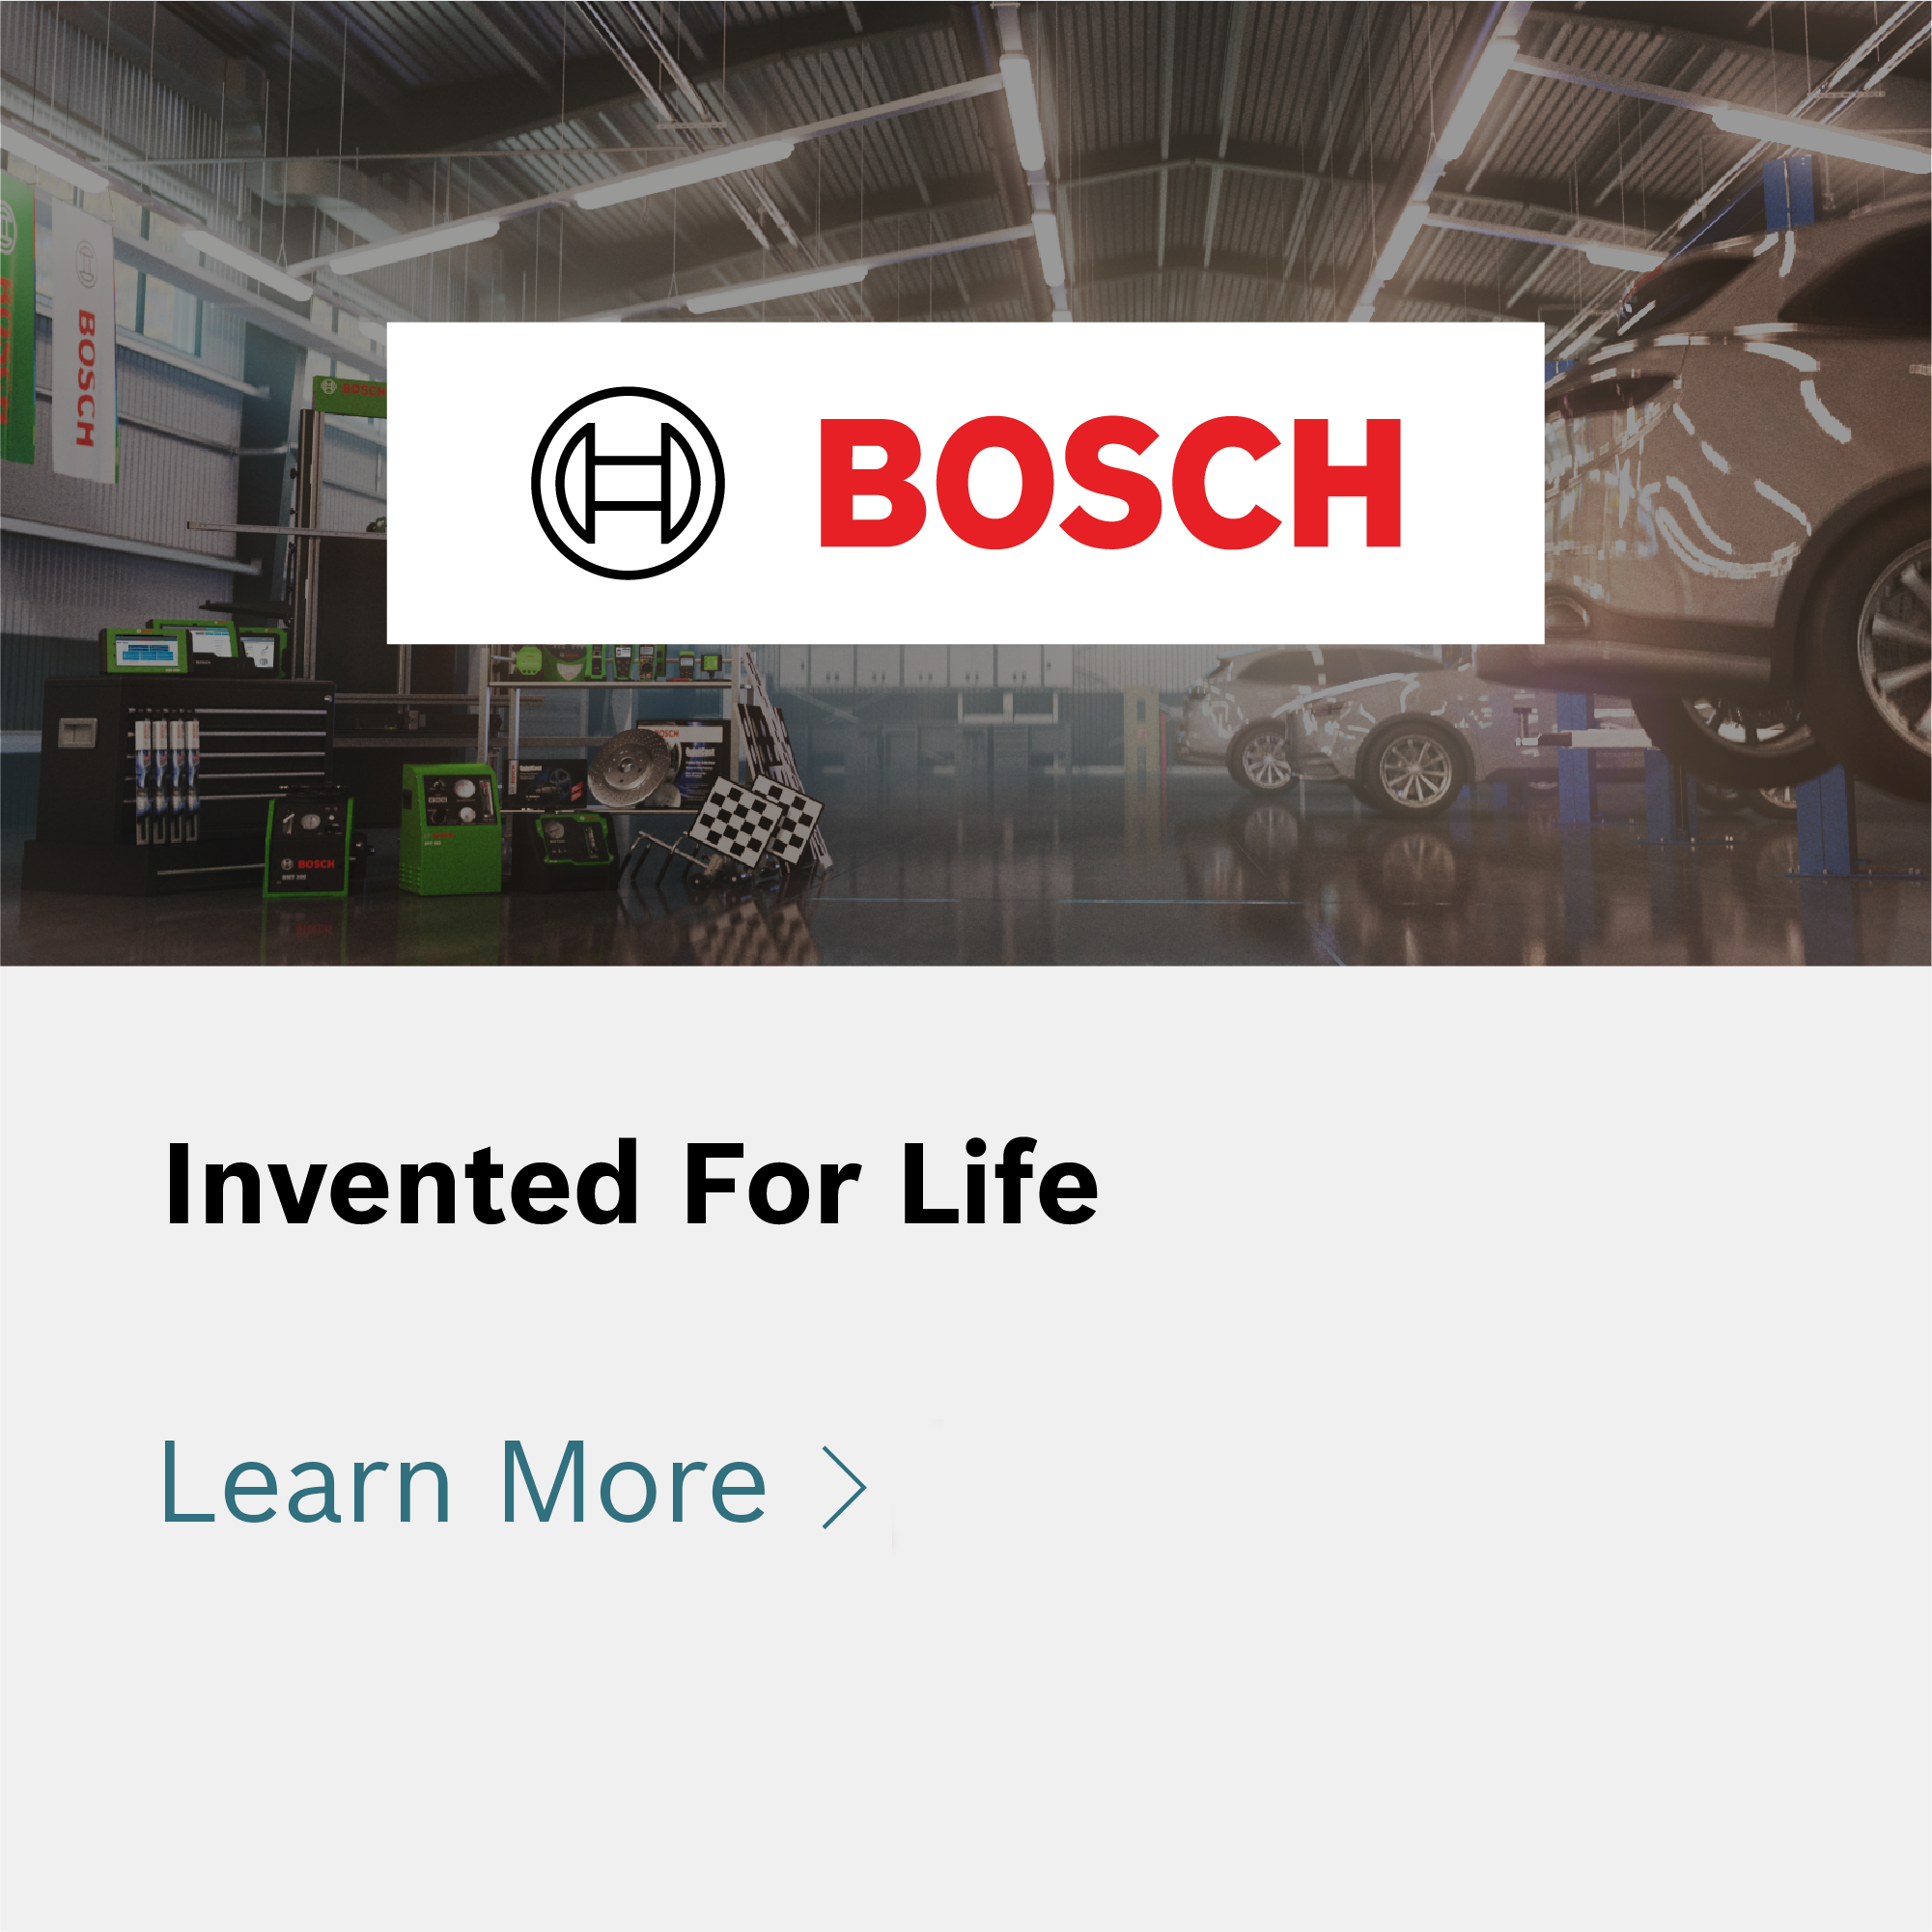 Bosch partner brand